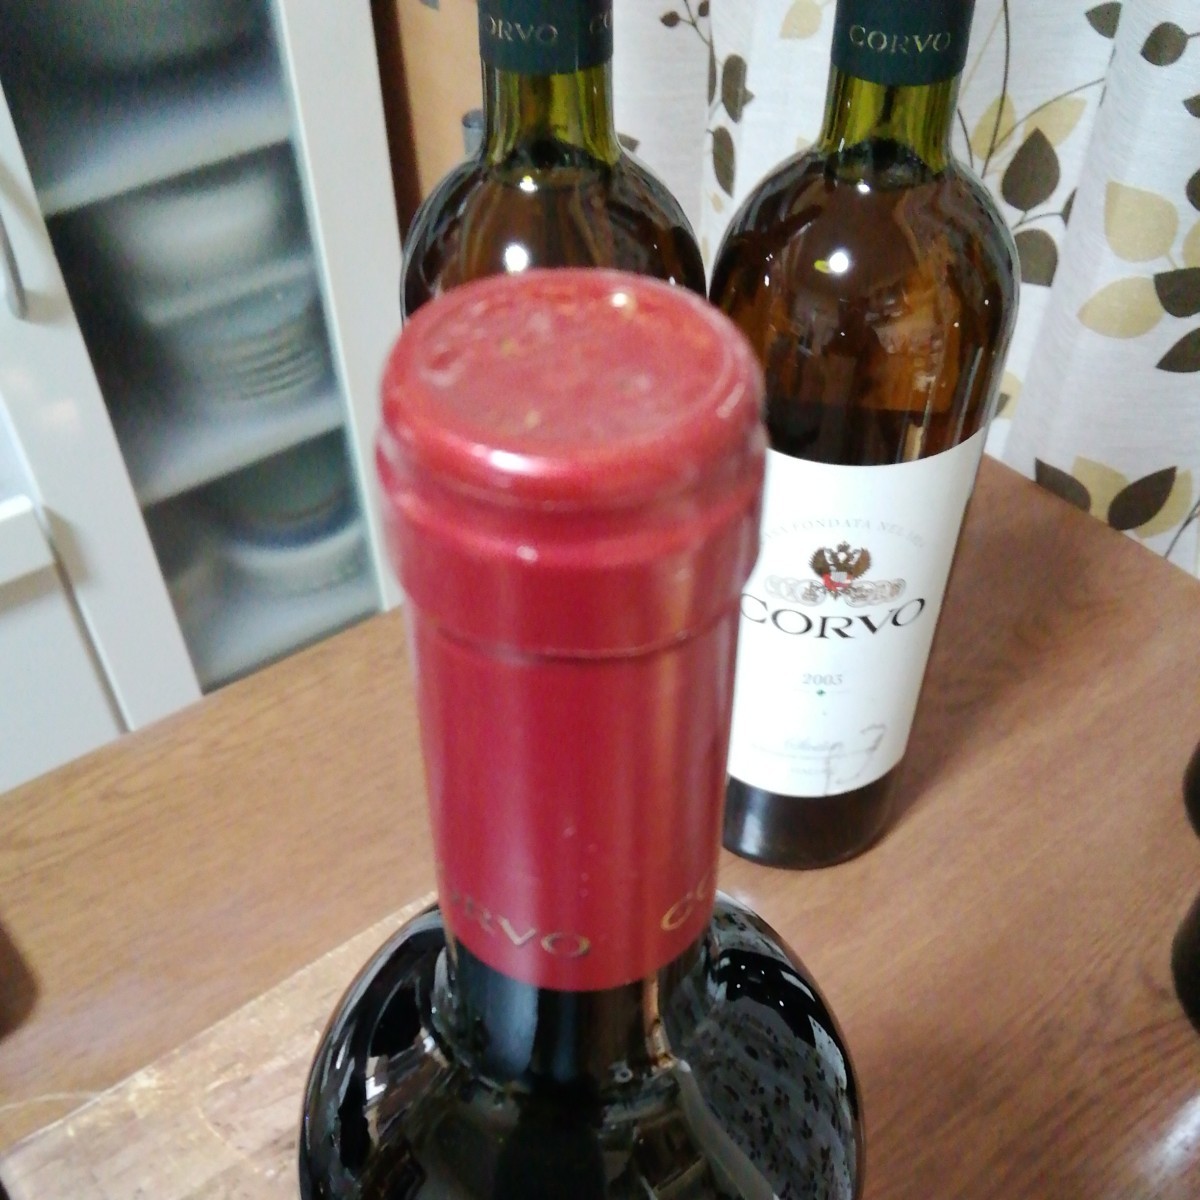  not yet . plug koruvo* rosso 2002 year 750ml 3ps.@koruvo* Bianco 2003 year 750ml 2 ps Italy si Chile a wine 5 pcs set 